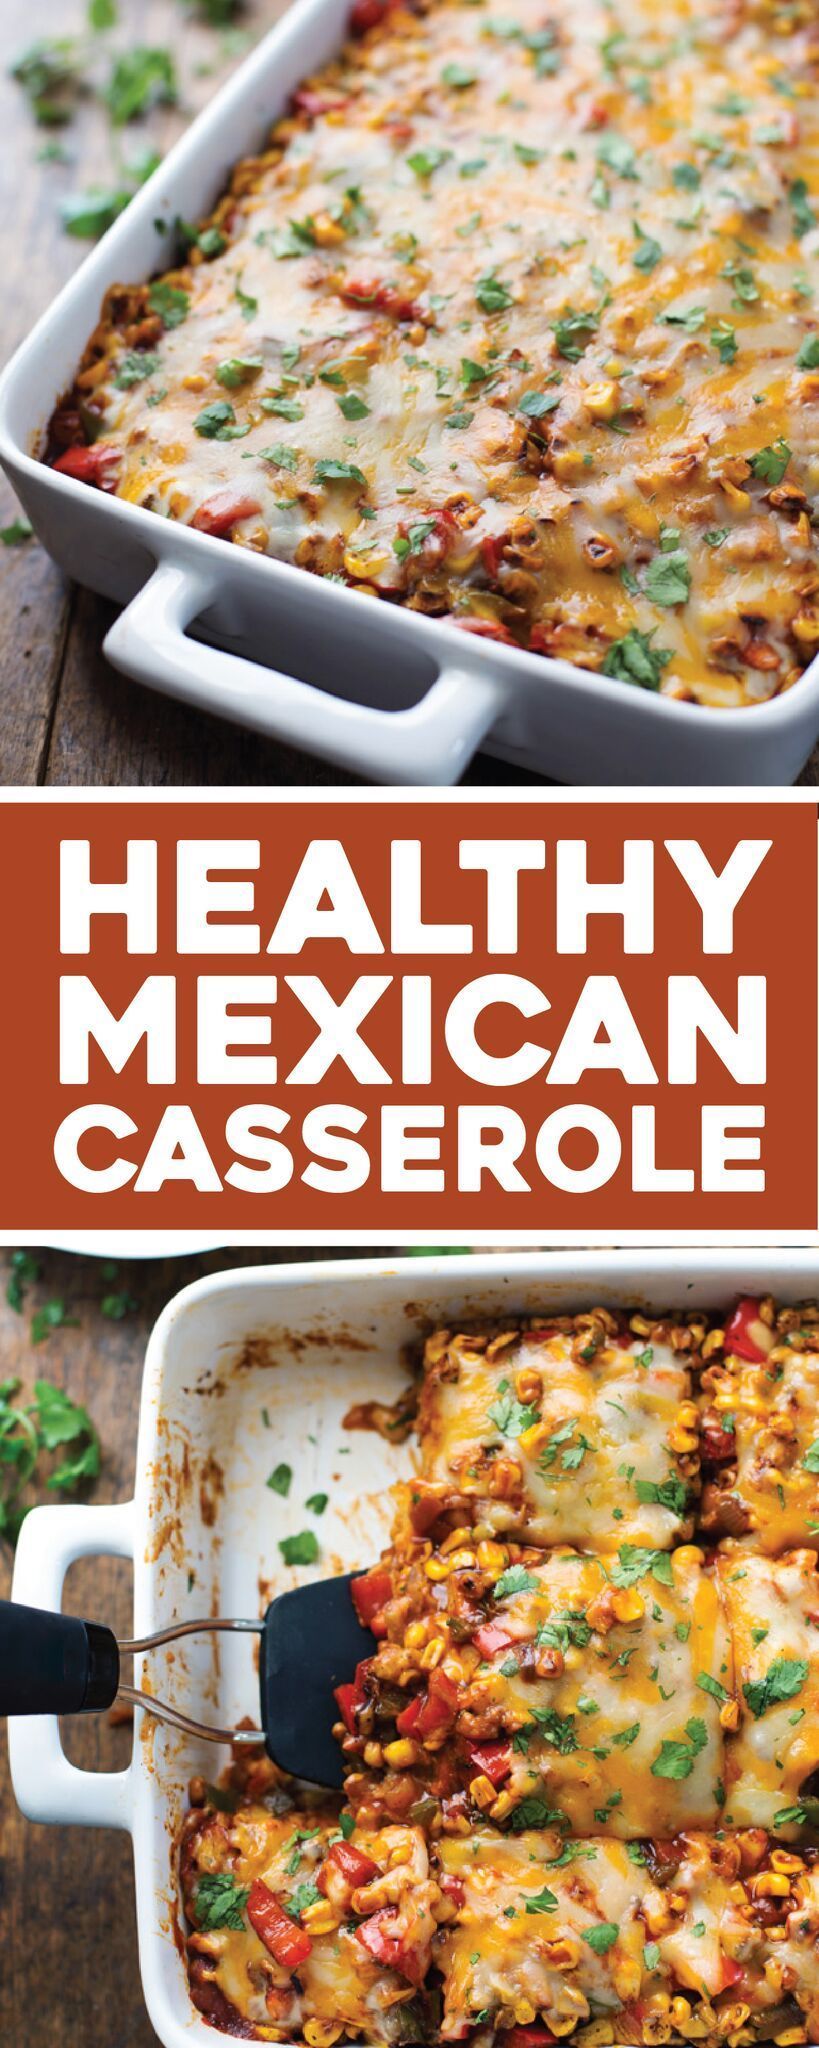 7 healthy recipes Casserole enchilada sauce ideas